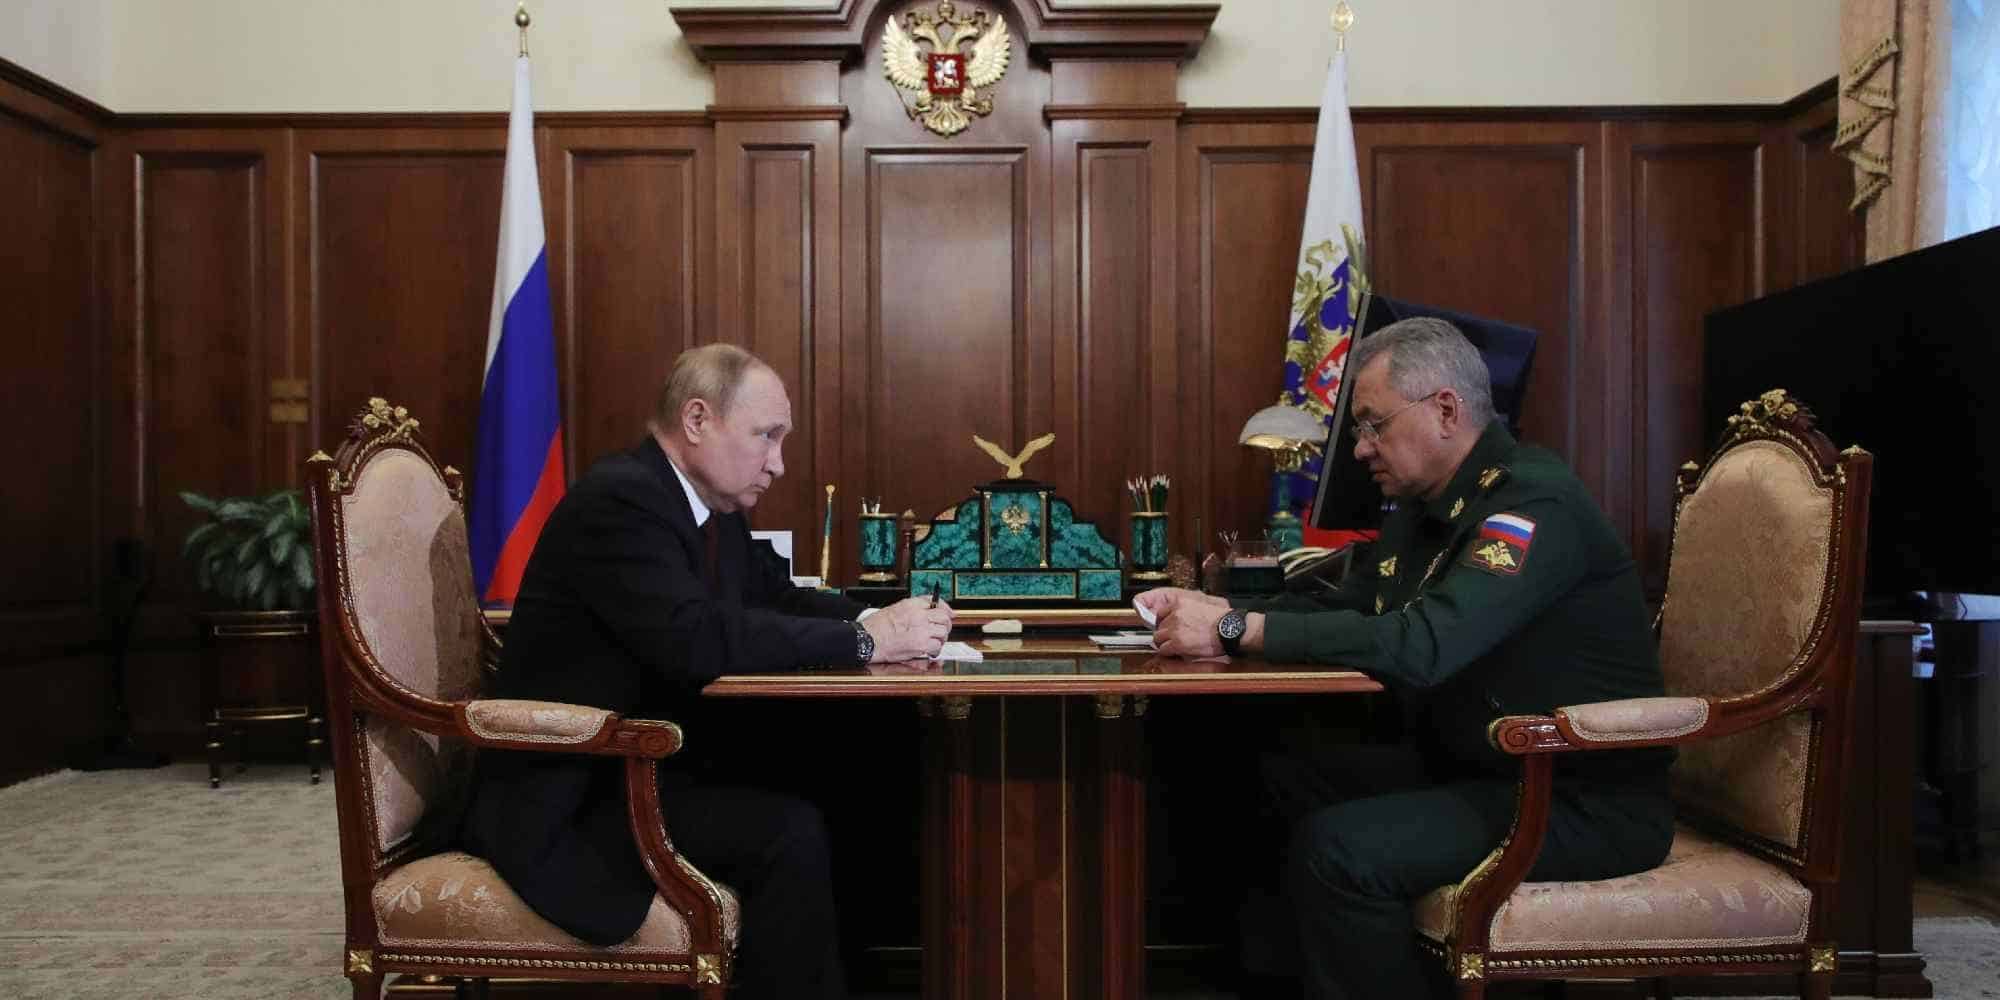 O Ρώσος πρόεδρος Βλαντιμίρ Πούτιν με τον υπουργό Άμυνας Σεργκέι Σοϊγκού